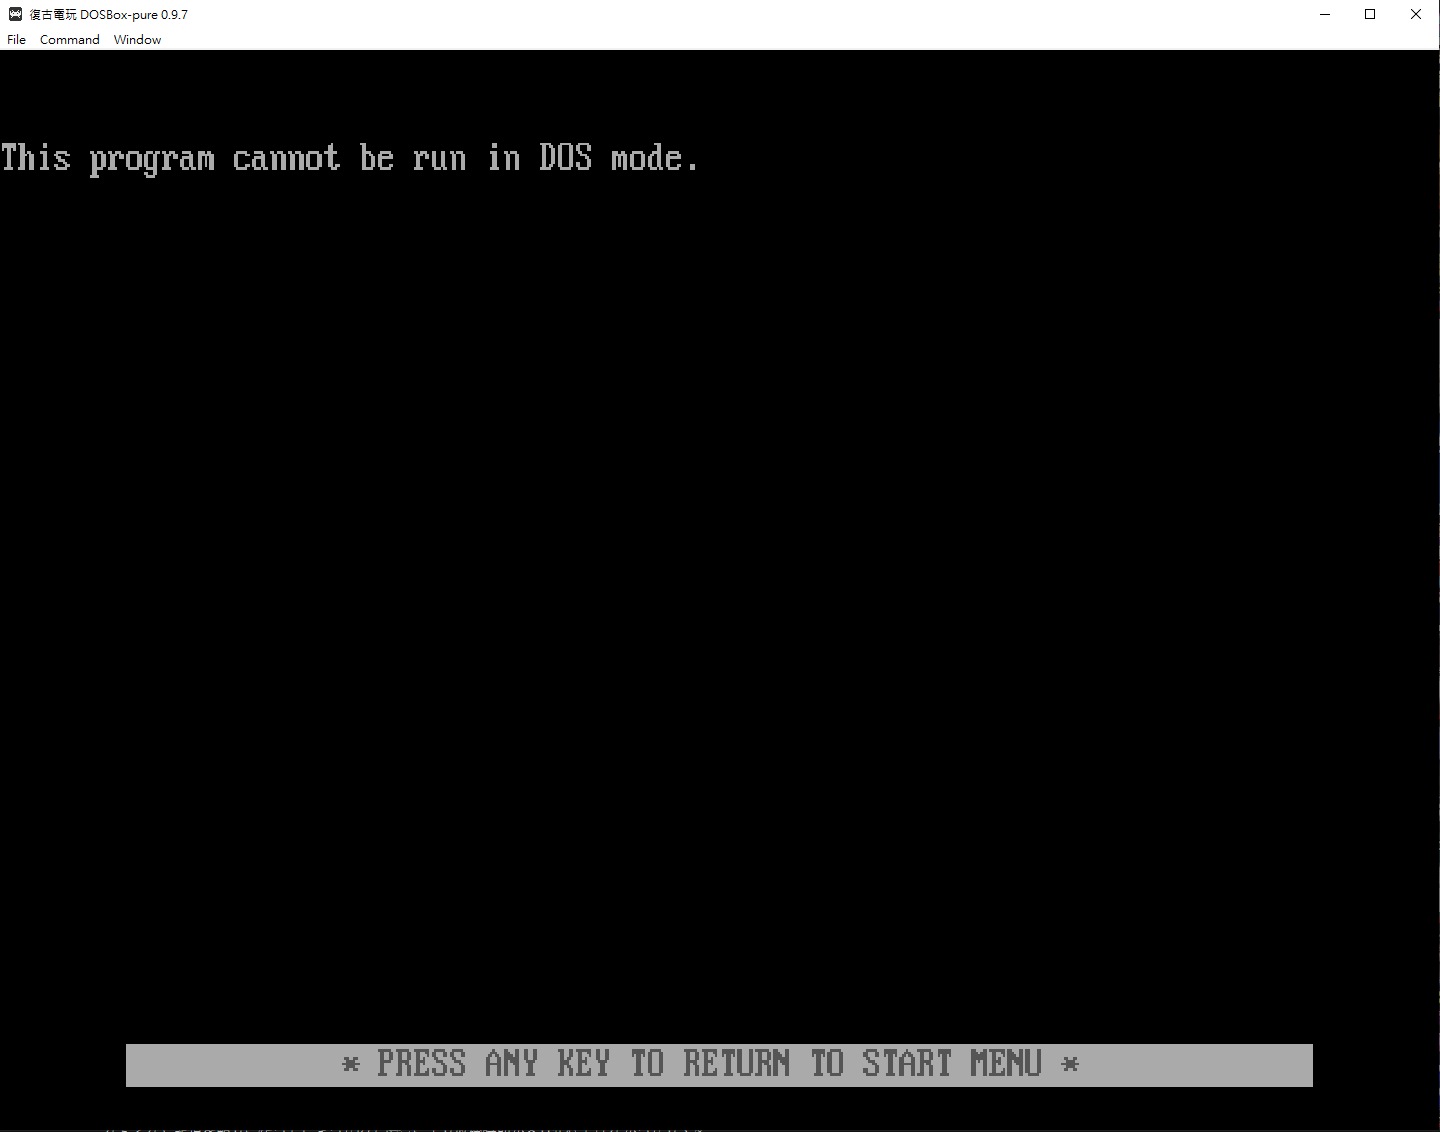 DOSBox Pure會提示執行檔並非Dos格式，按任意鍵繼續。